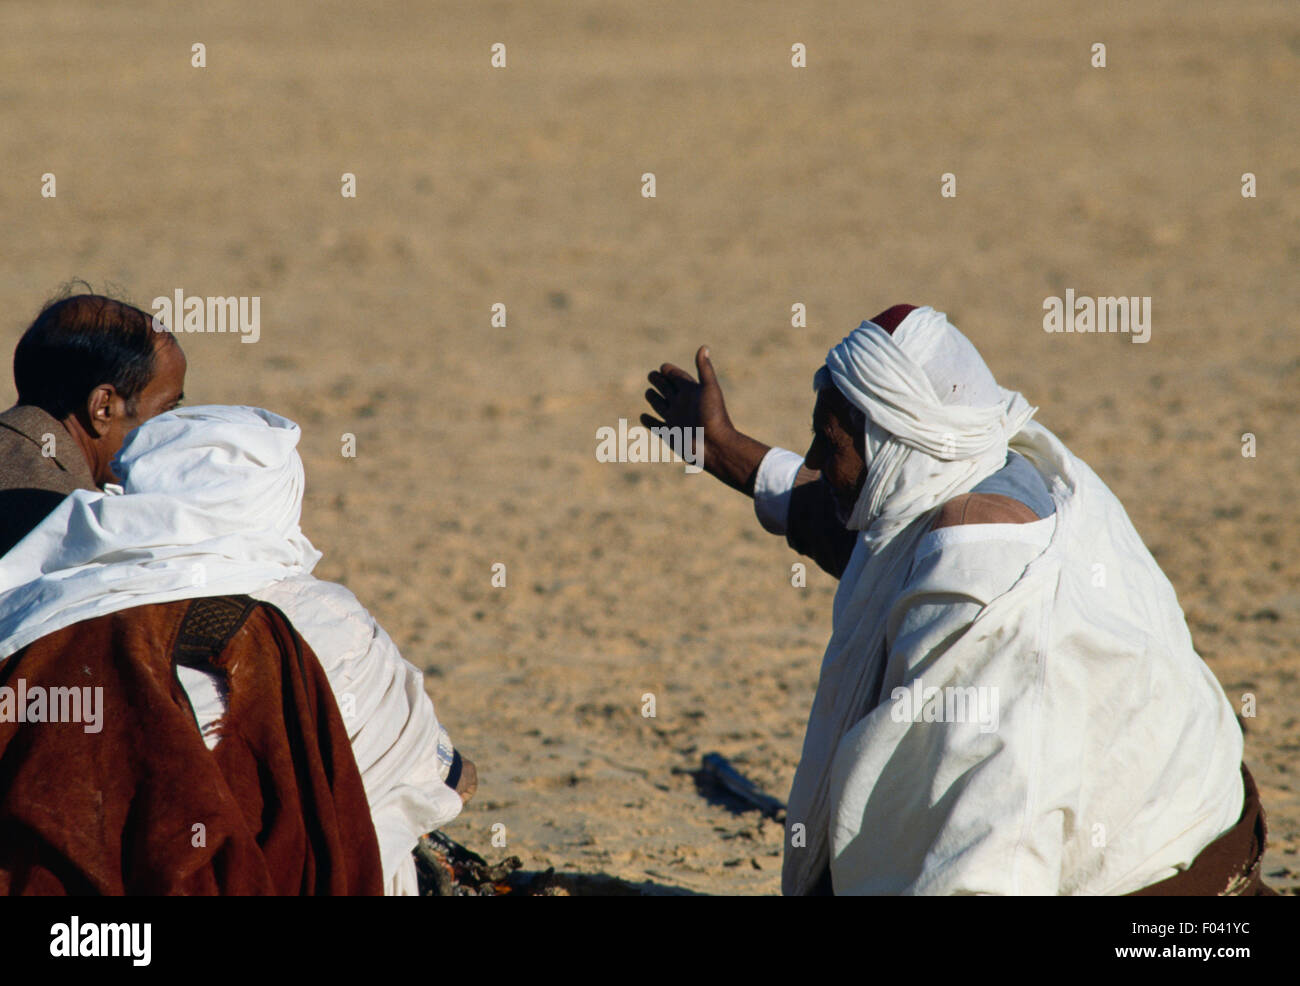 Men in traditional clothes, Festival of the Sahara in Douz, Tunisia. Stock Photo